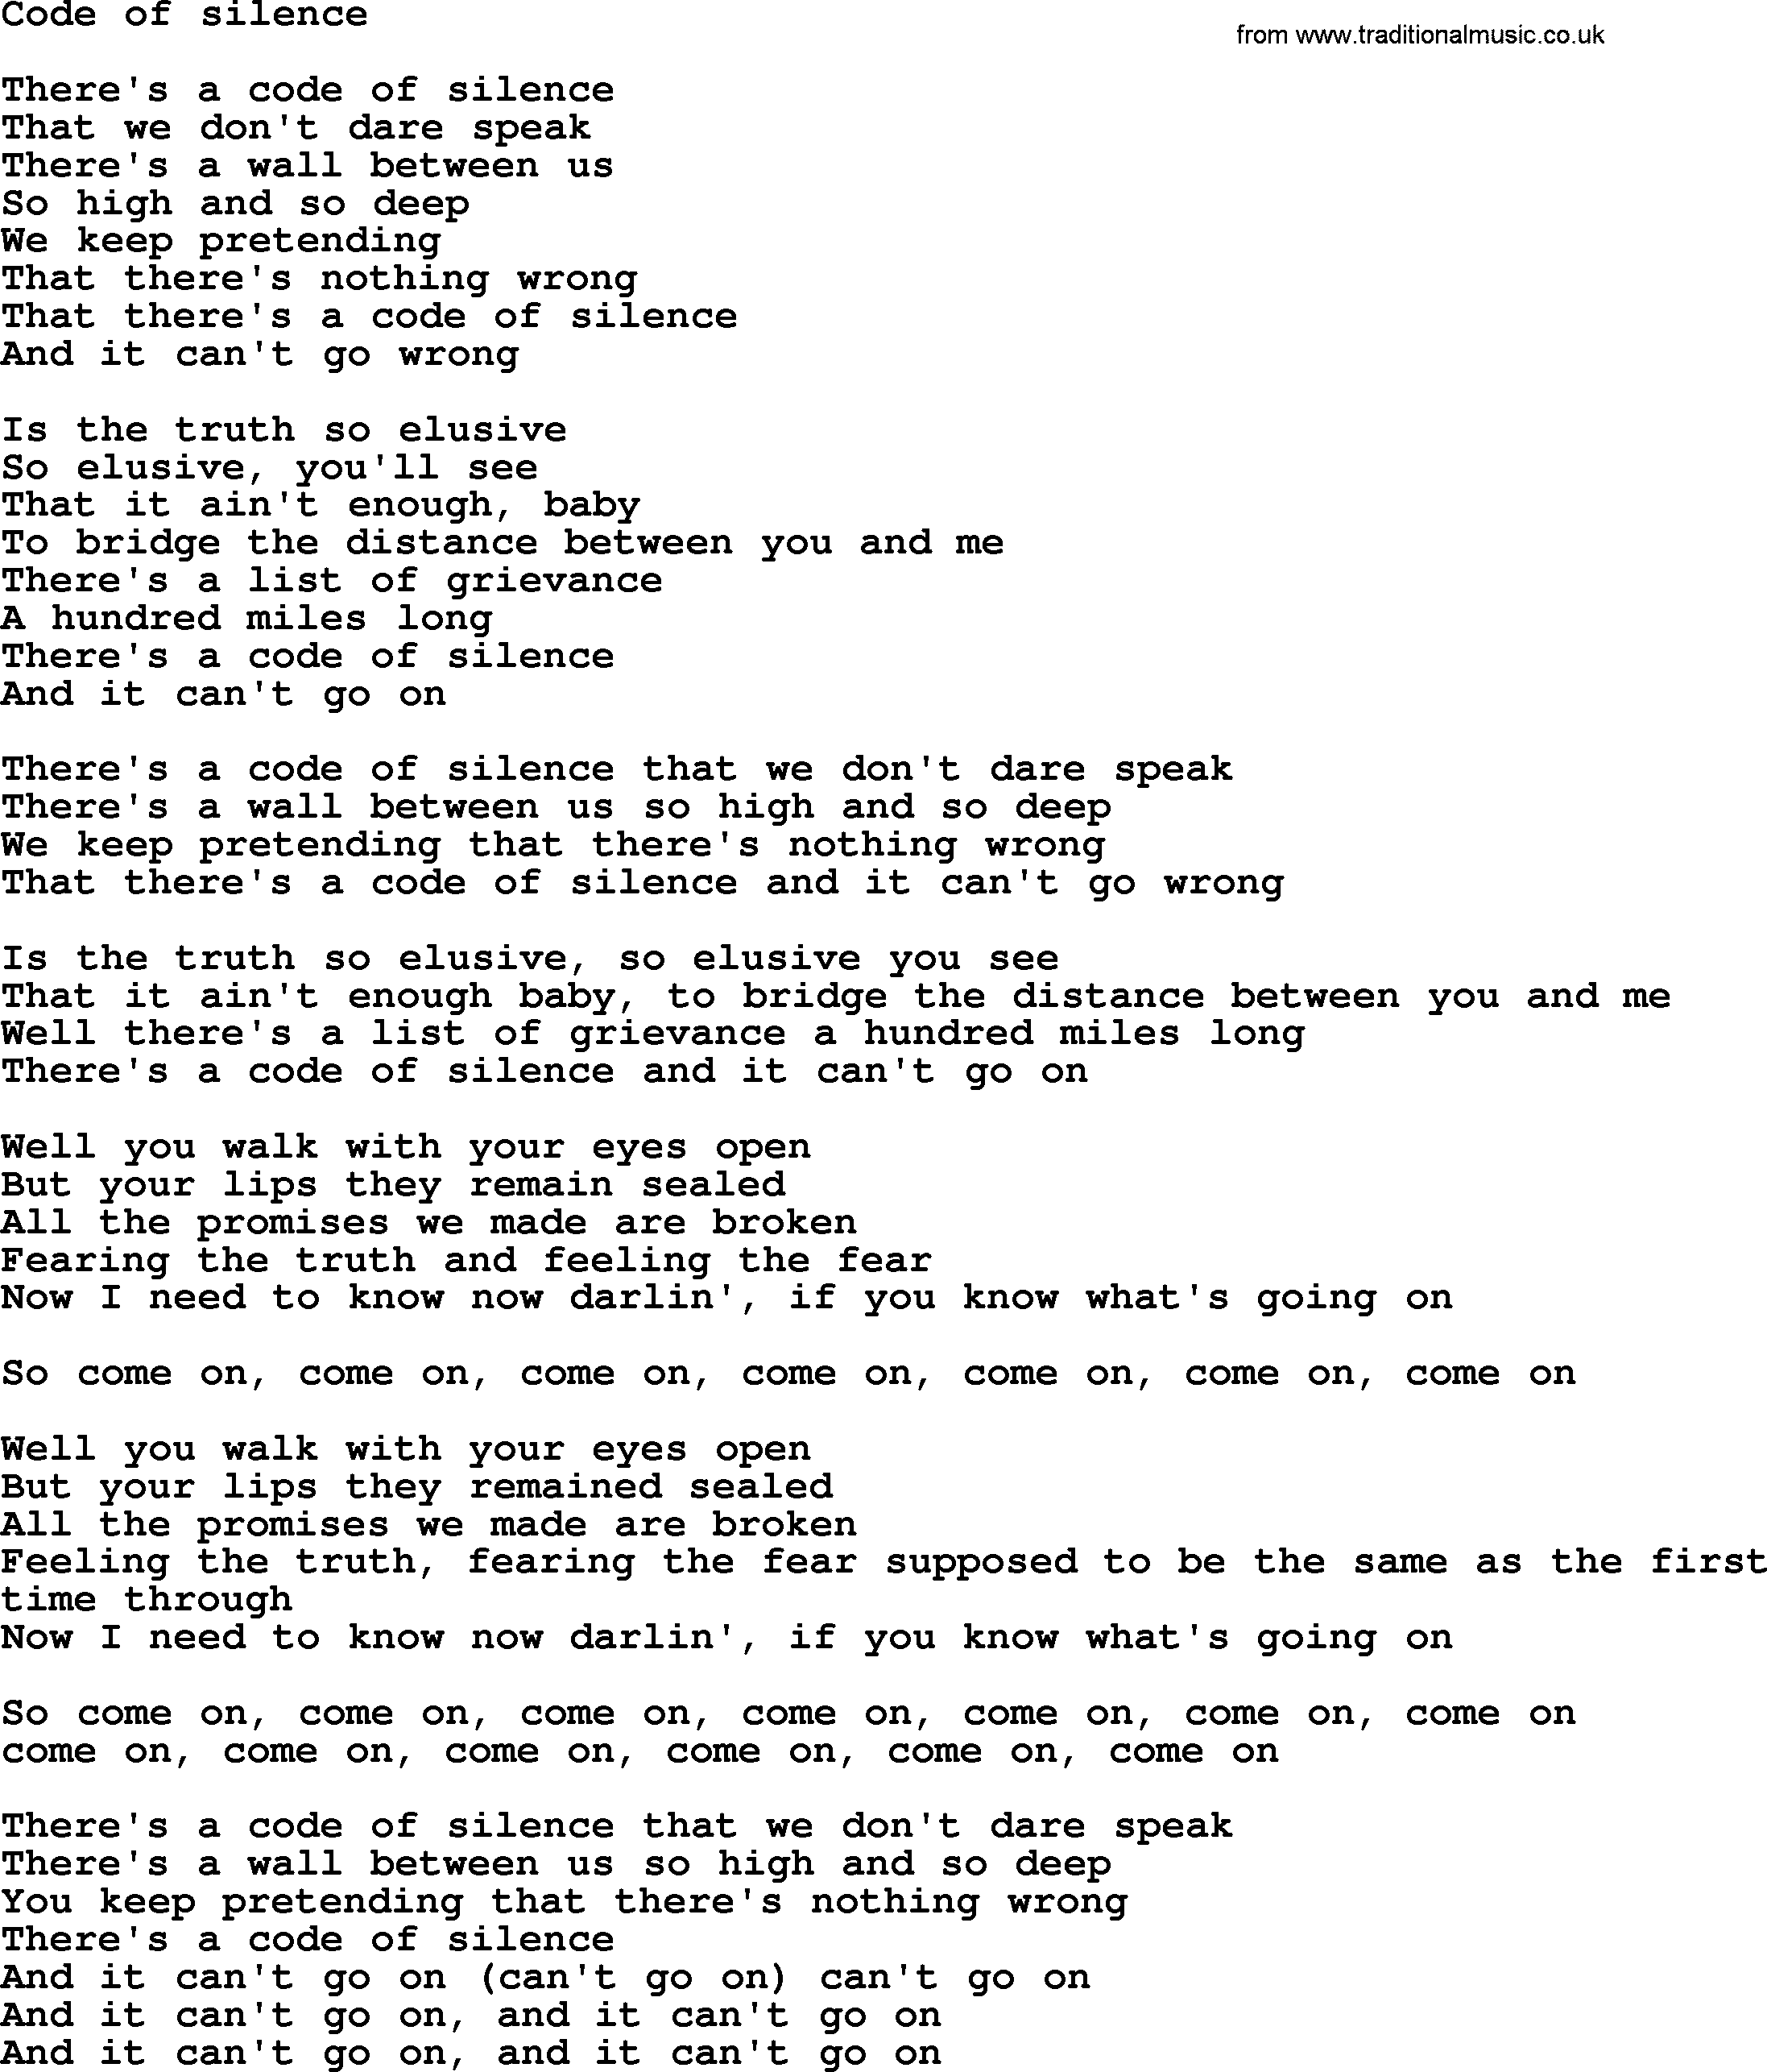 Bruce Springsteen song: Code Of Silence lyrics